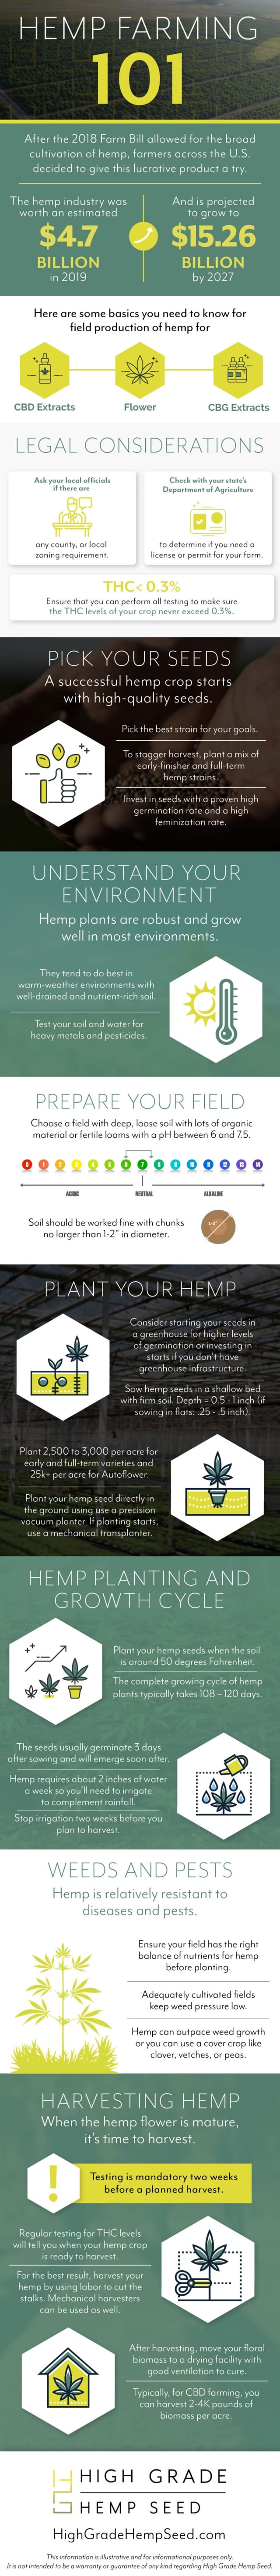 Hemp Farming 101 Infographic